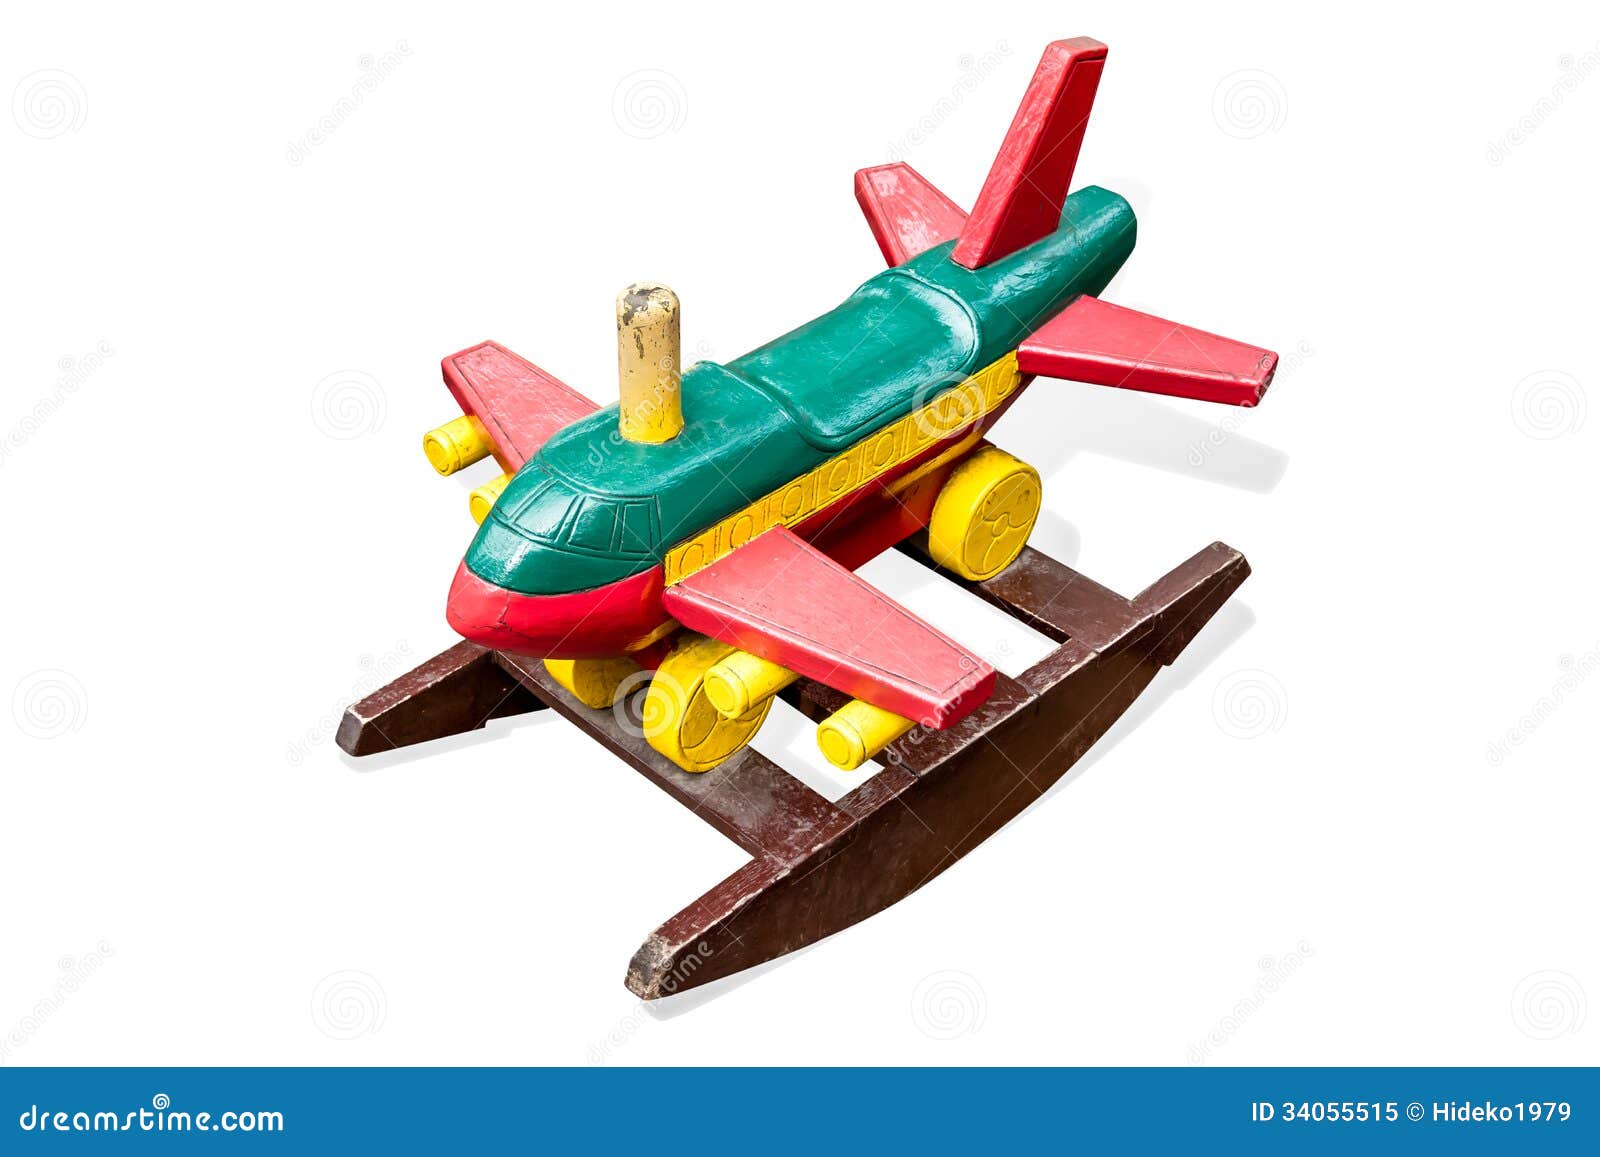 Wooden Toy Passenger Jet Plane Royalty Free Stock Photo - Image 